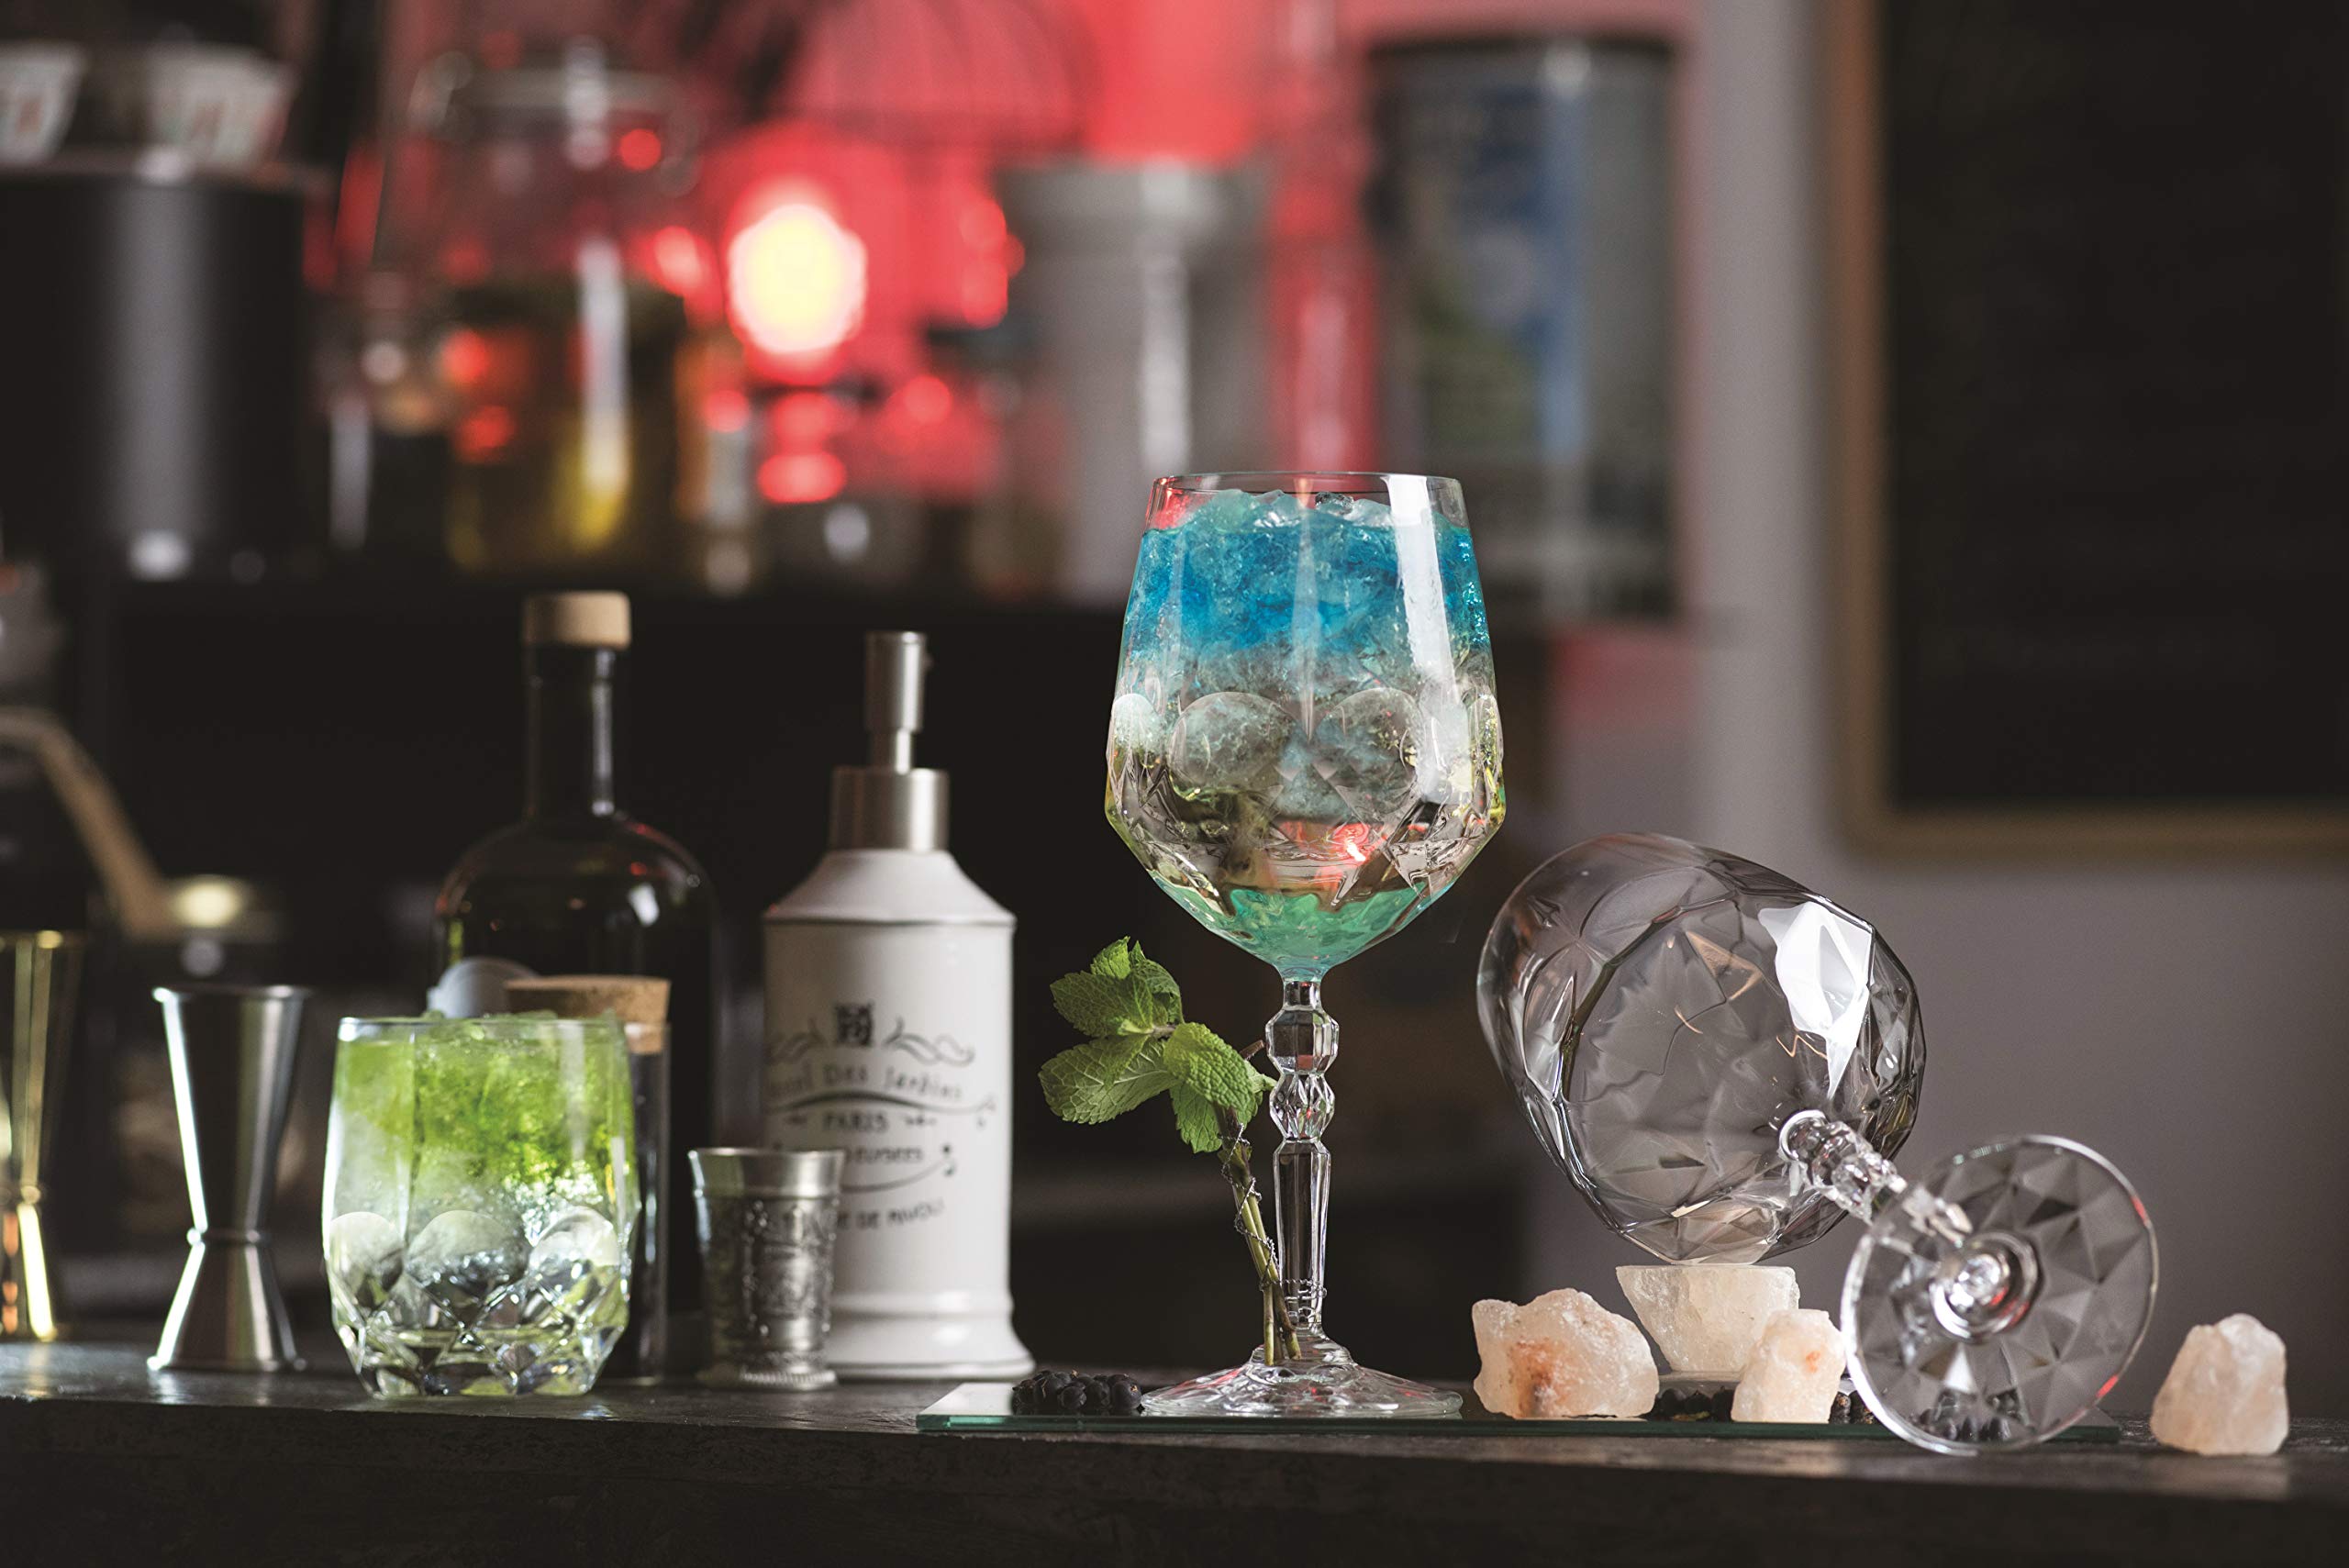 Barski Goblet - Red Wine Glass - Cocktail - Water Glass - Stemmed Glasses - Set of 6 Goblets - Crystal like Glass - 24 oz. Beautifully Designed Made in Europe